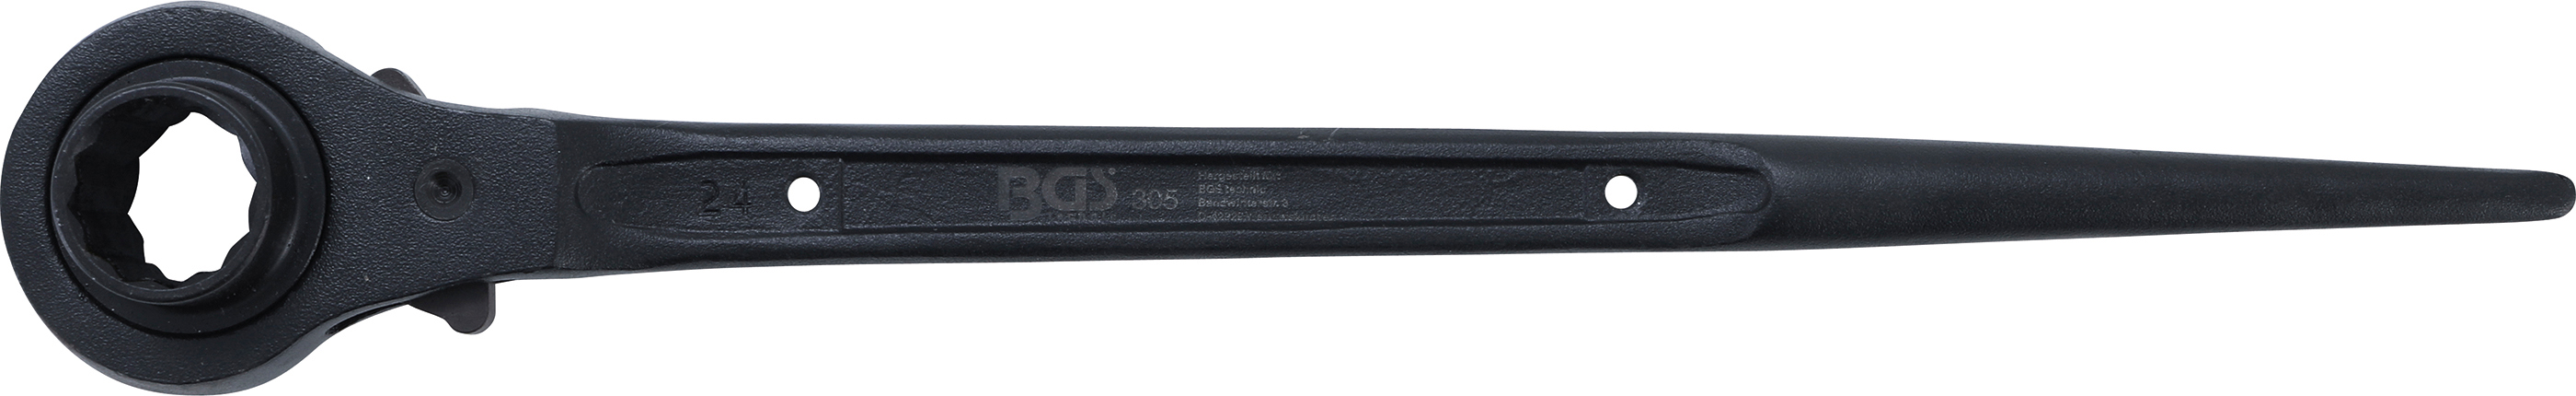 BGS 305 Cheie cu clichet pentru montat schele, 24 x 30 mm